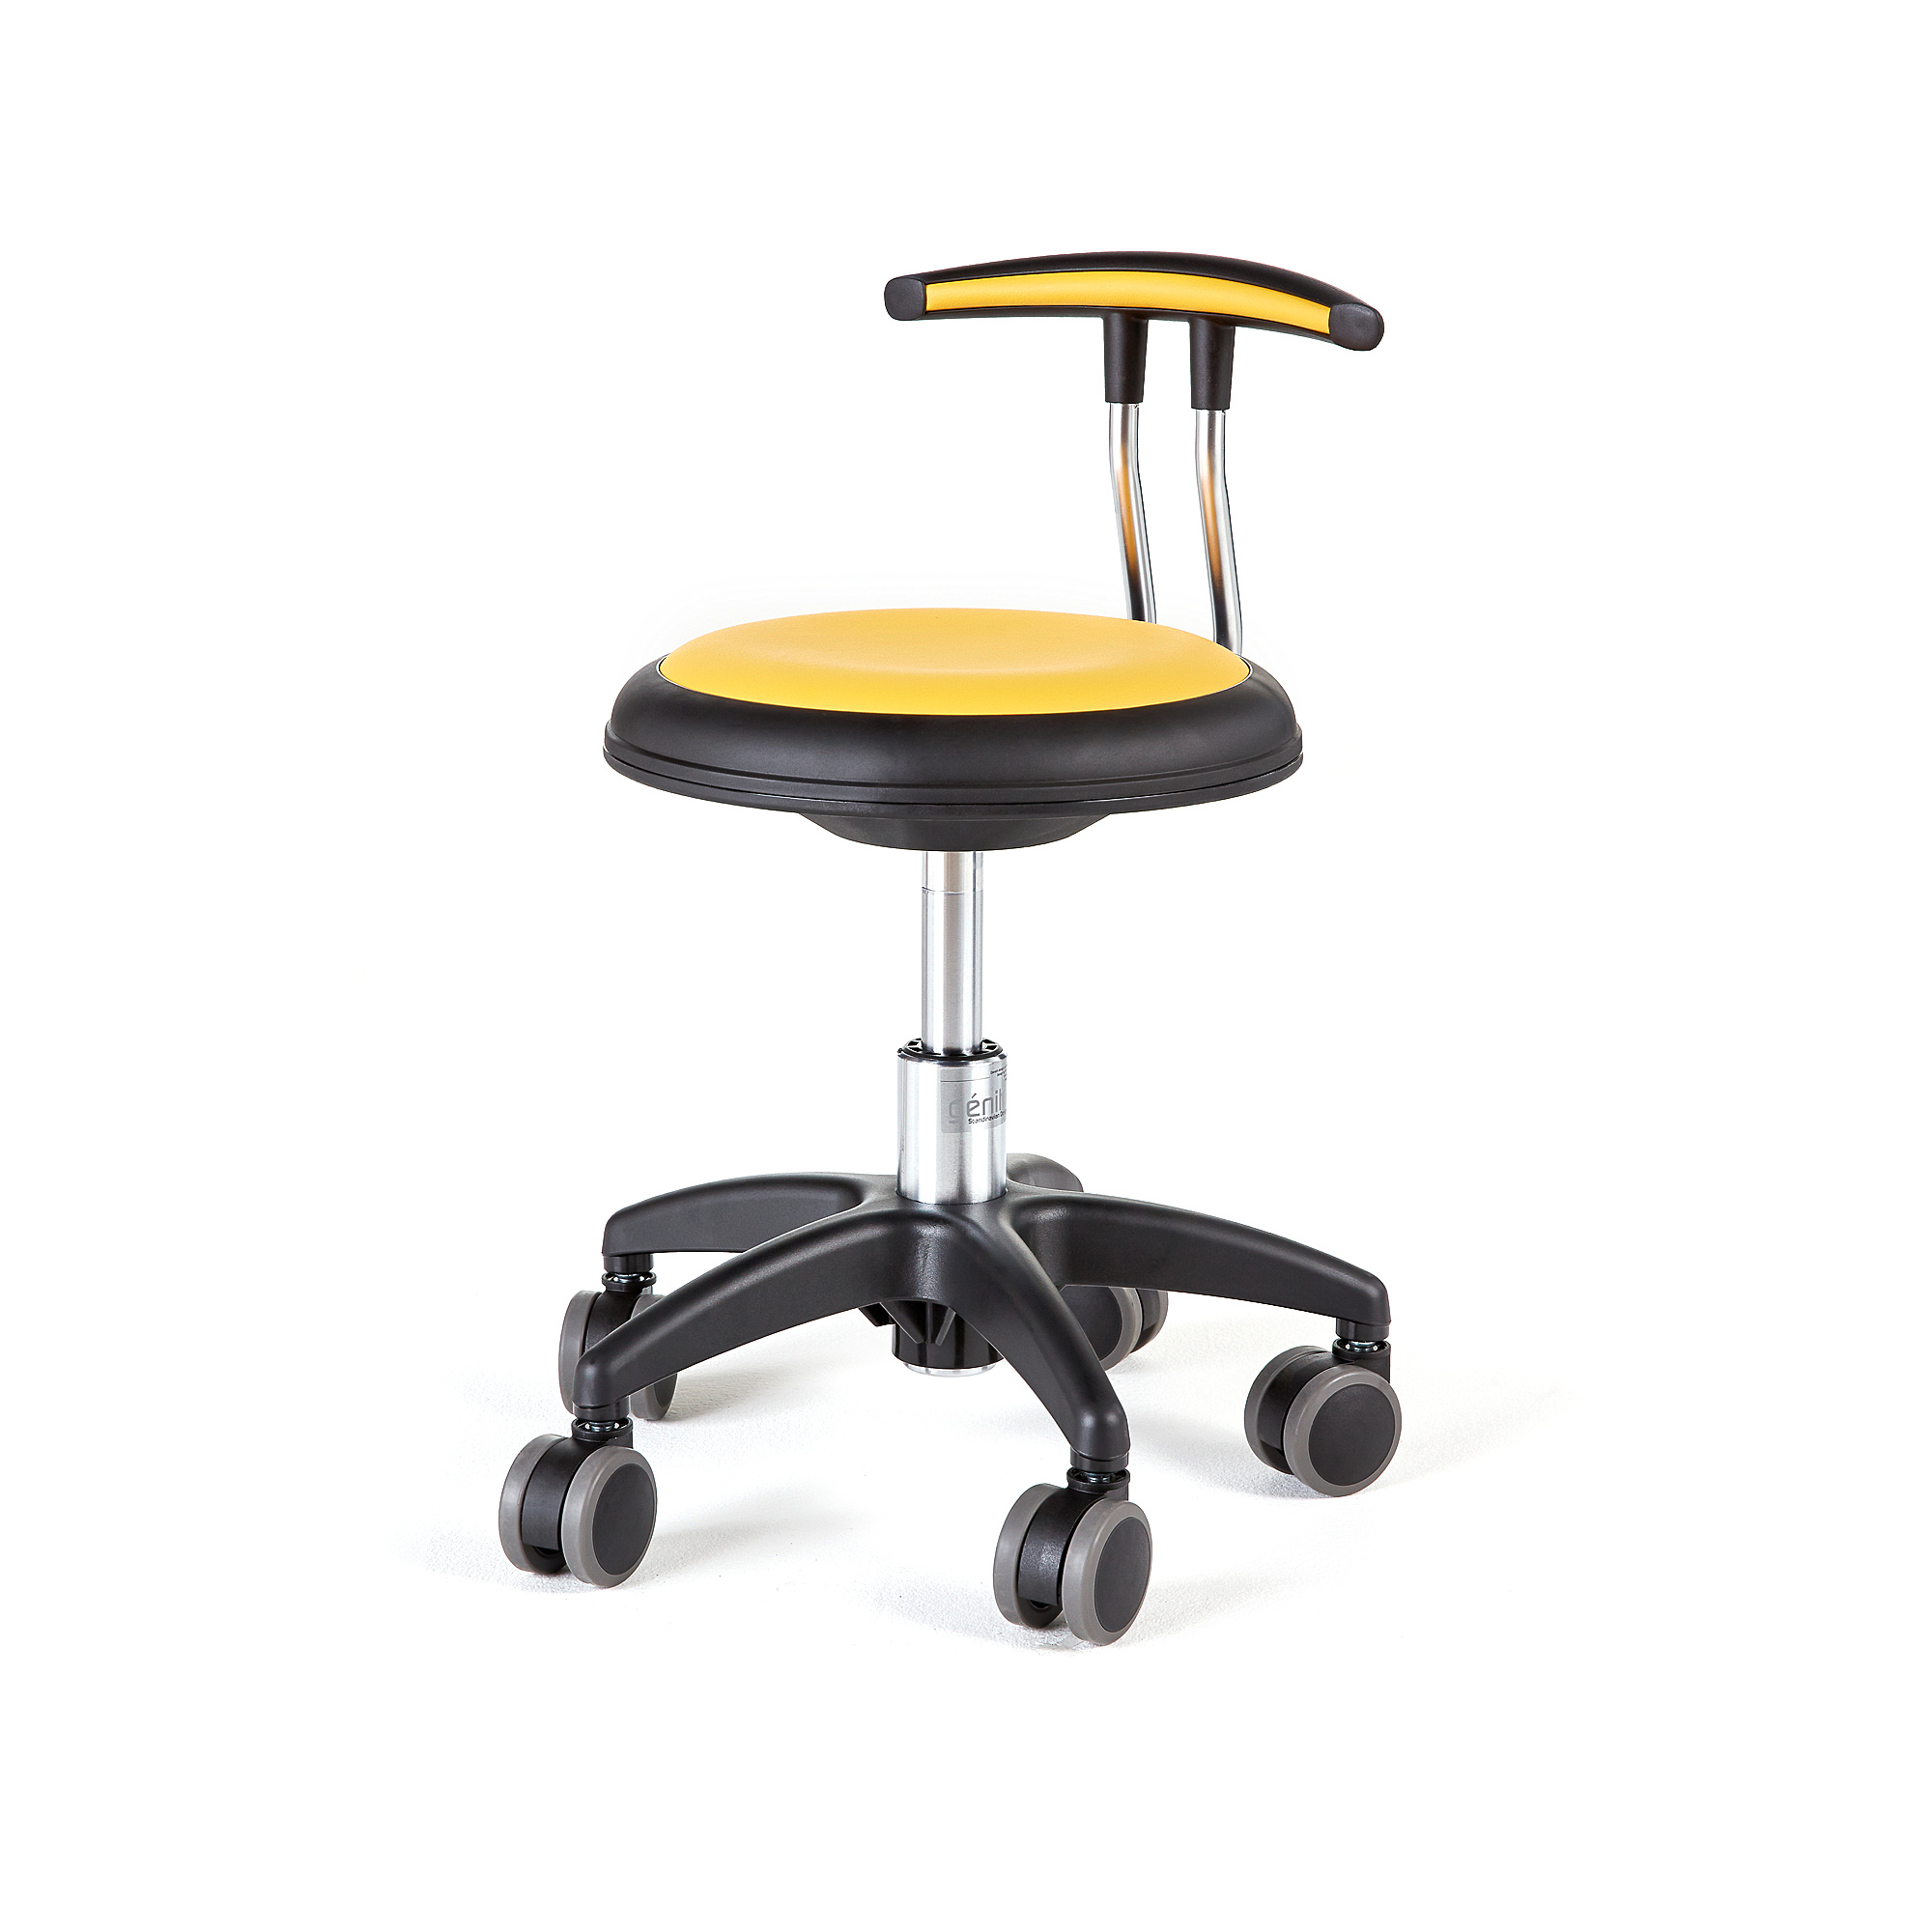 E-shop Mobilná pracovná stolička STAR, V 300-380 mm, žltá